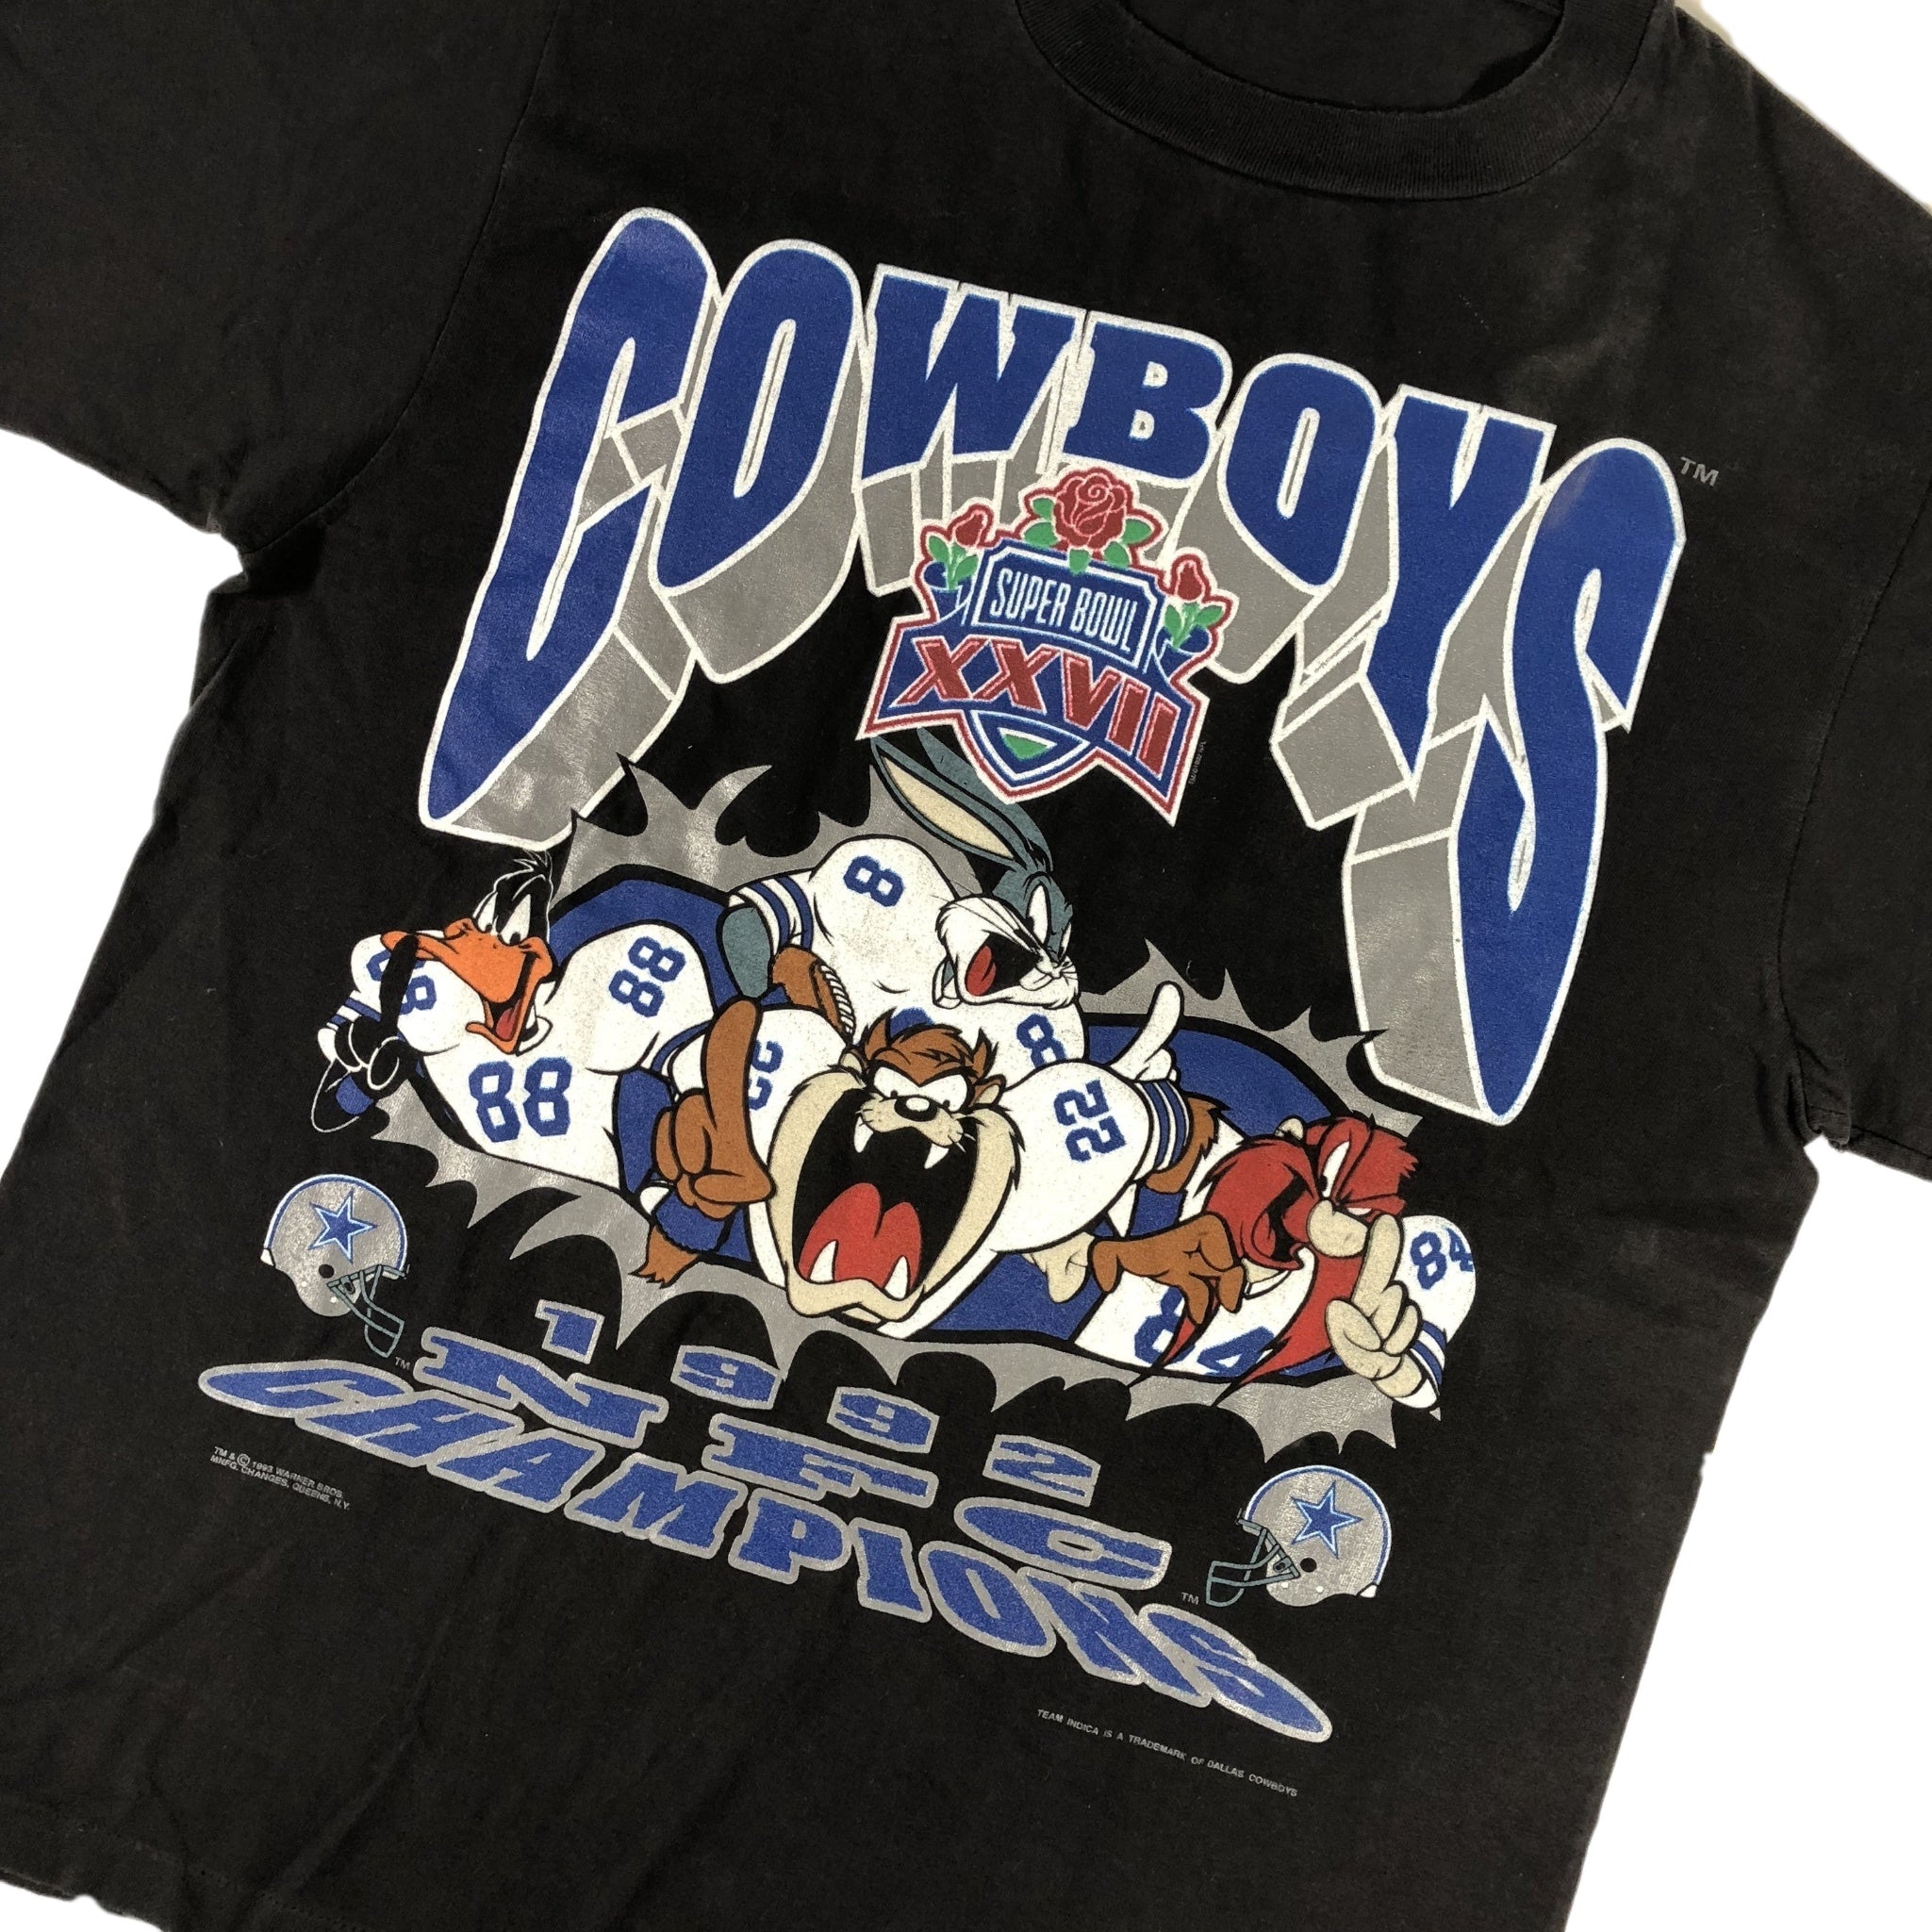 dallas cowboys championship shirt